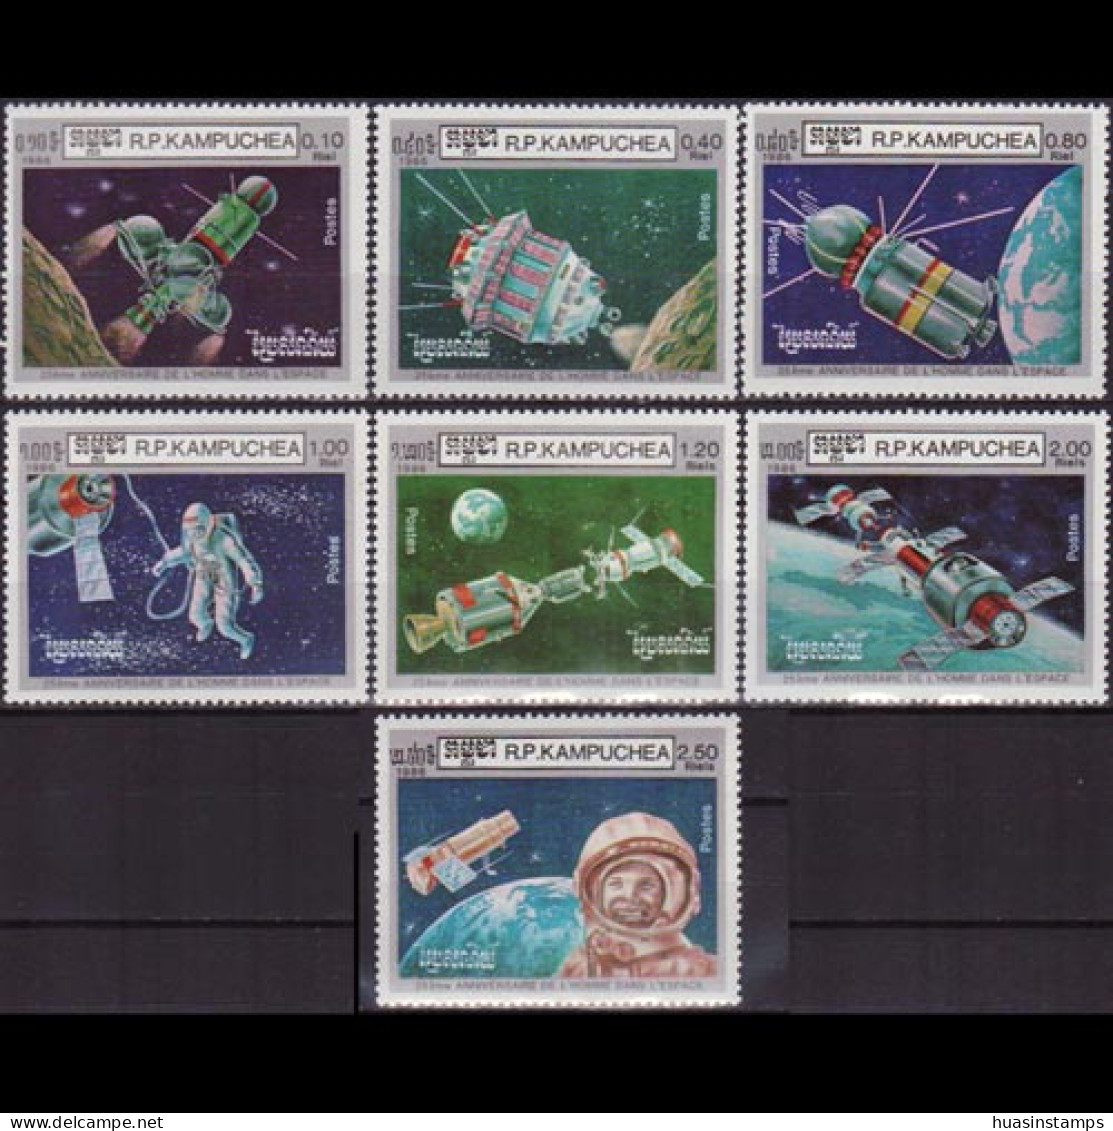 CAMBODIA 1986 - Scott# 670-6 Space Flight Set Of 7 MNH - Camboya